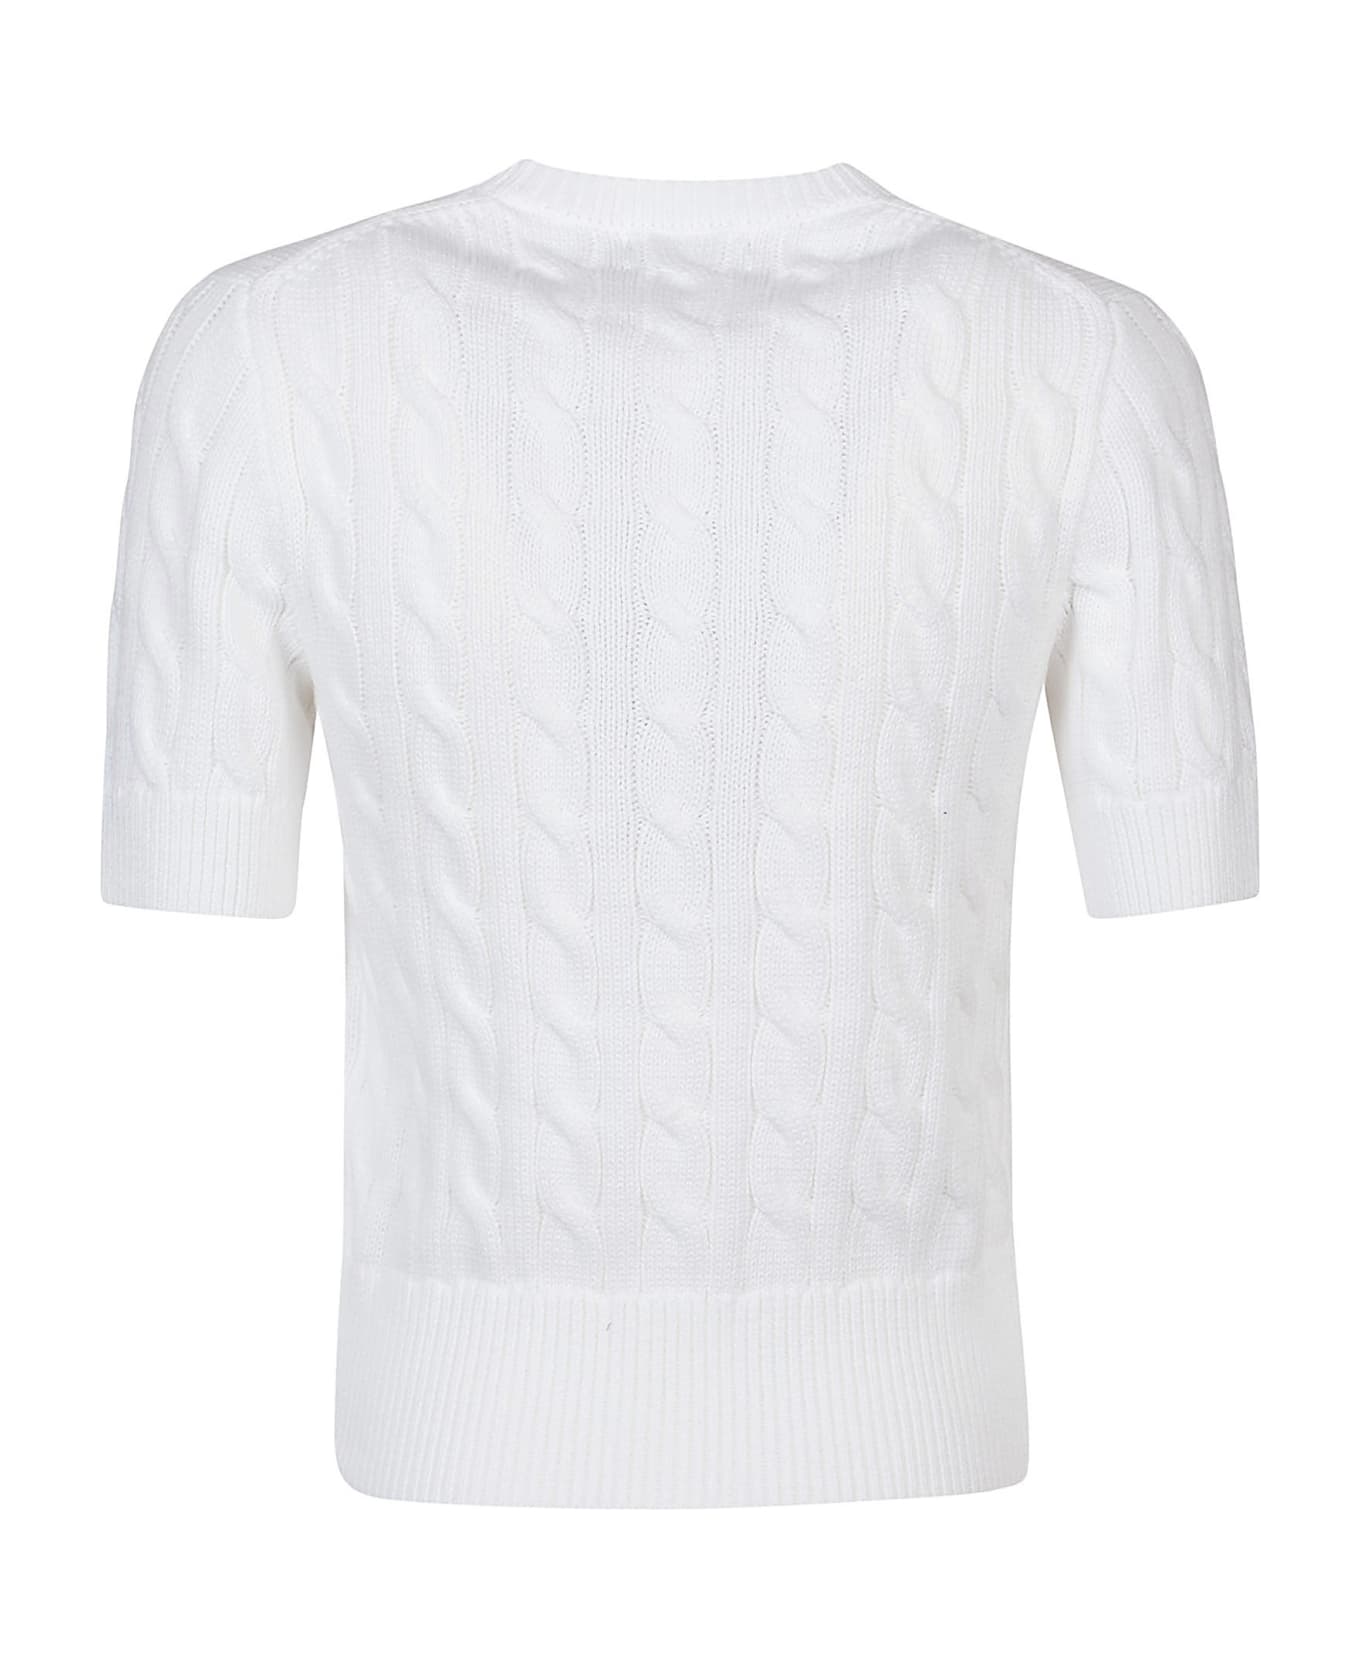 Polo Ralph Lauren Short Sleeve Cardigan - White カーディガン